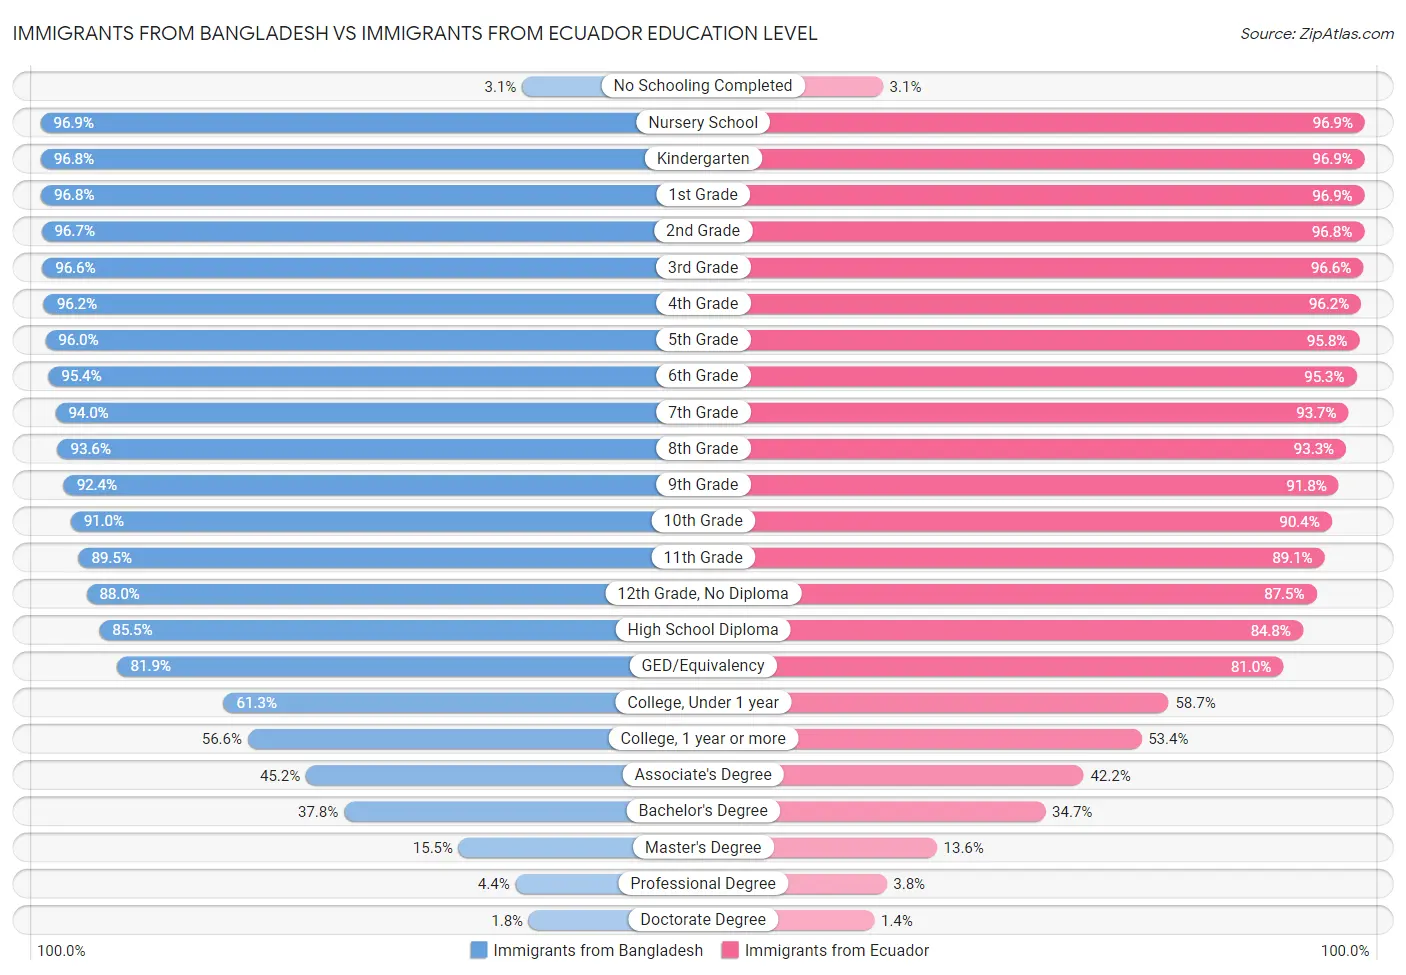 Immigrants from Bangladesh vs Immigrants from Ecuador Education Level